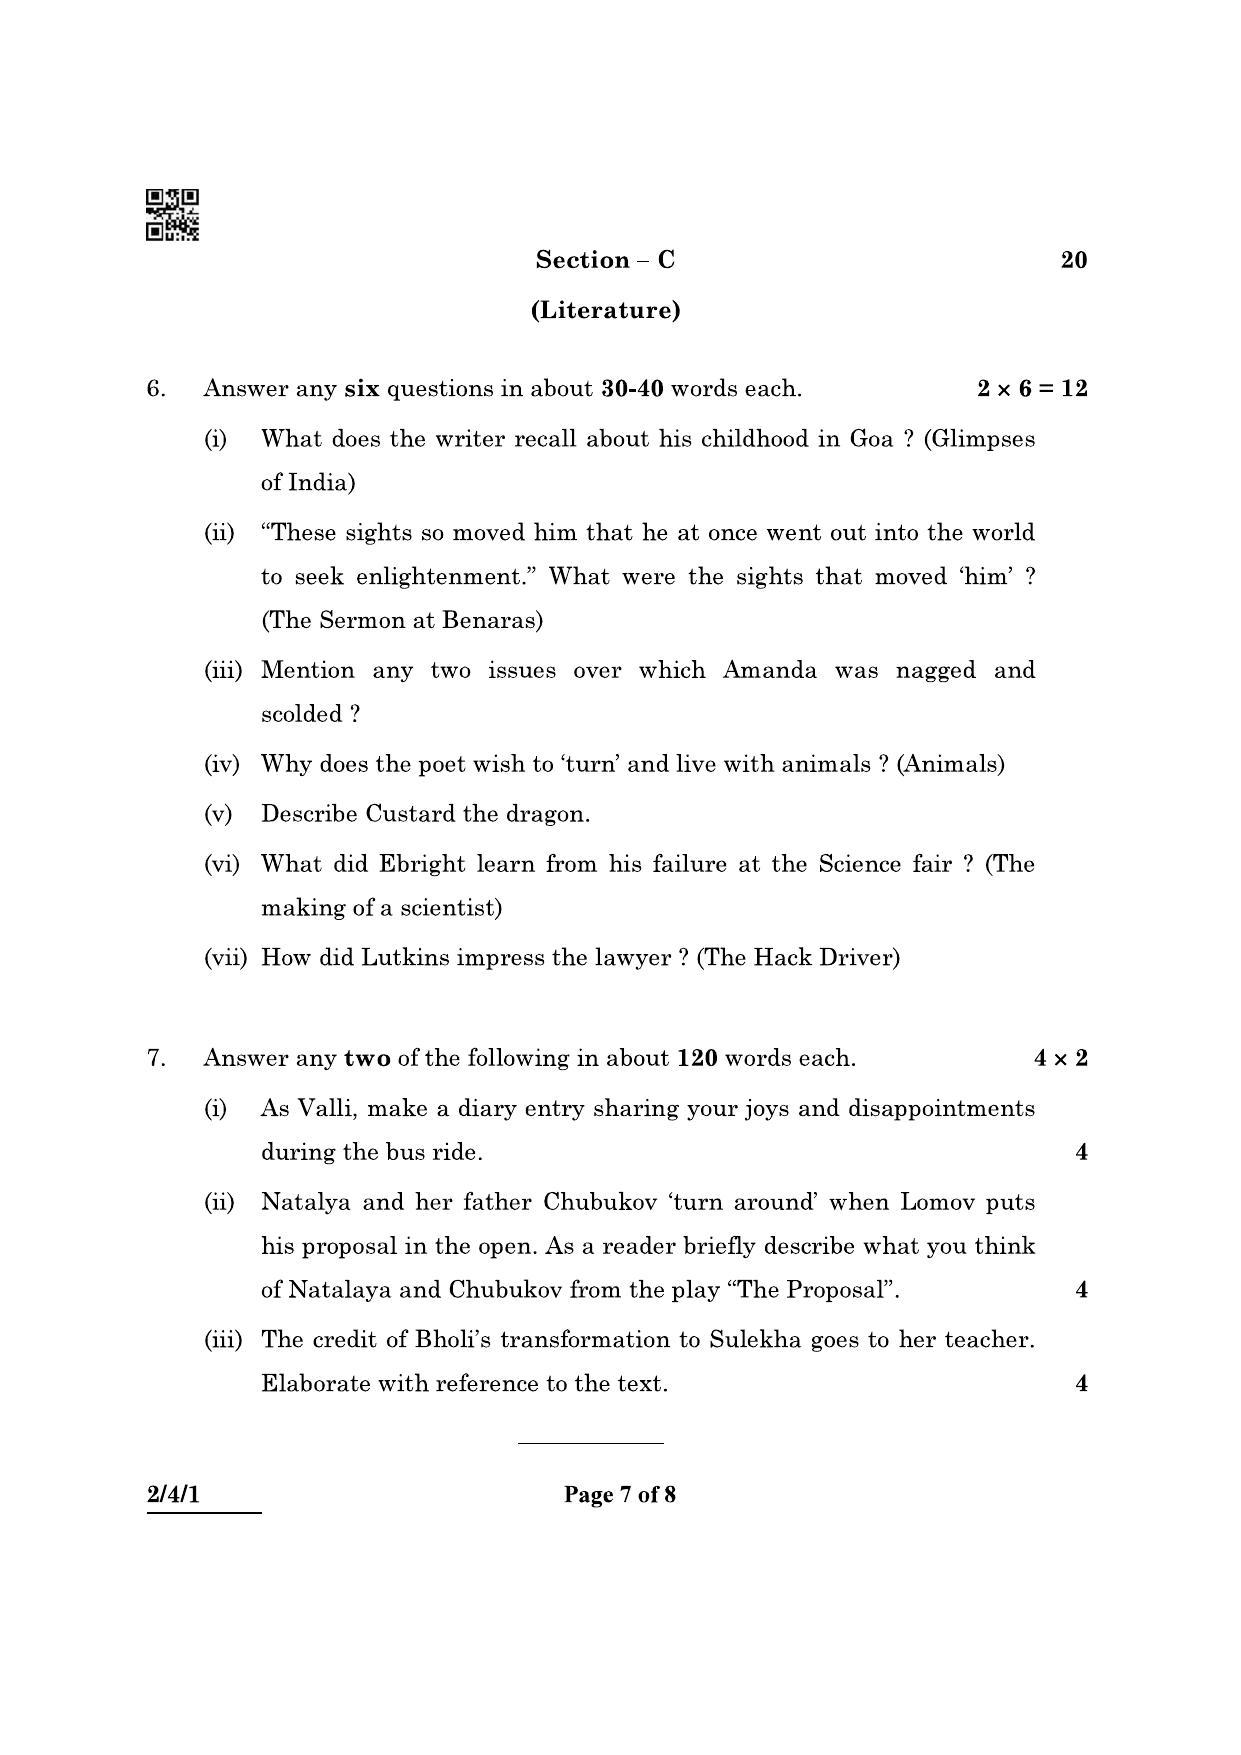 CBSE Class 10 2-4-1 (English L & L) 2022 Question Paper - Page 7